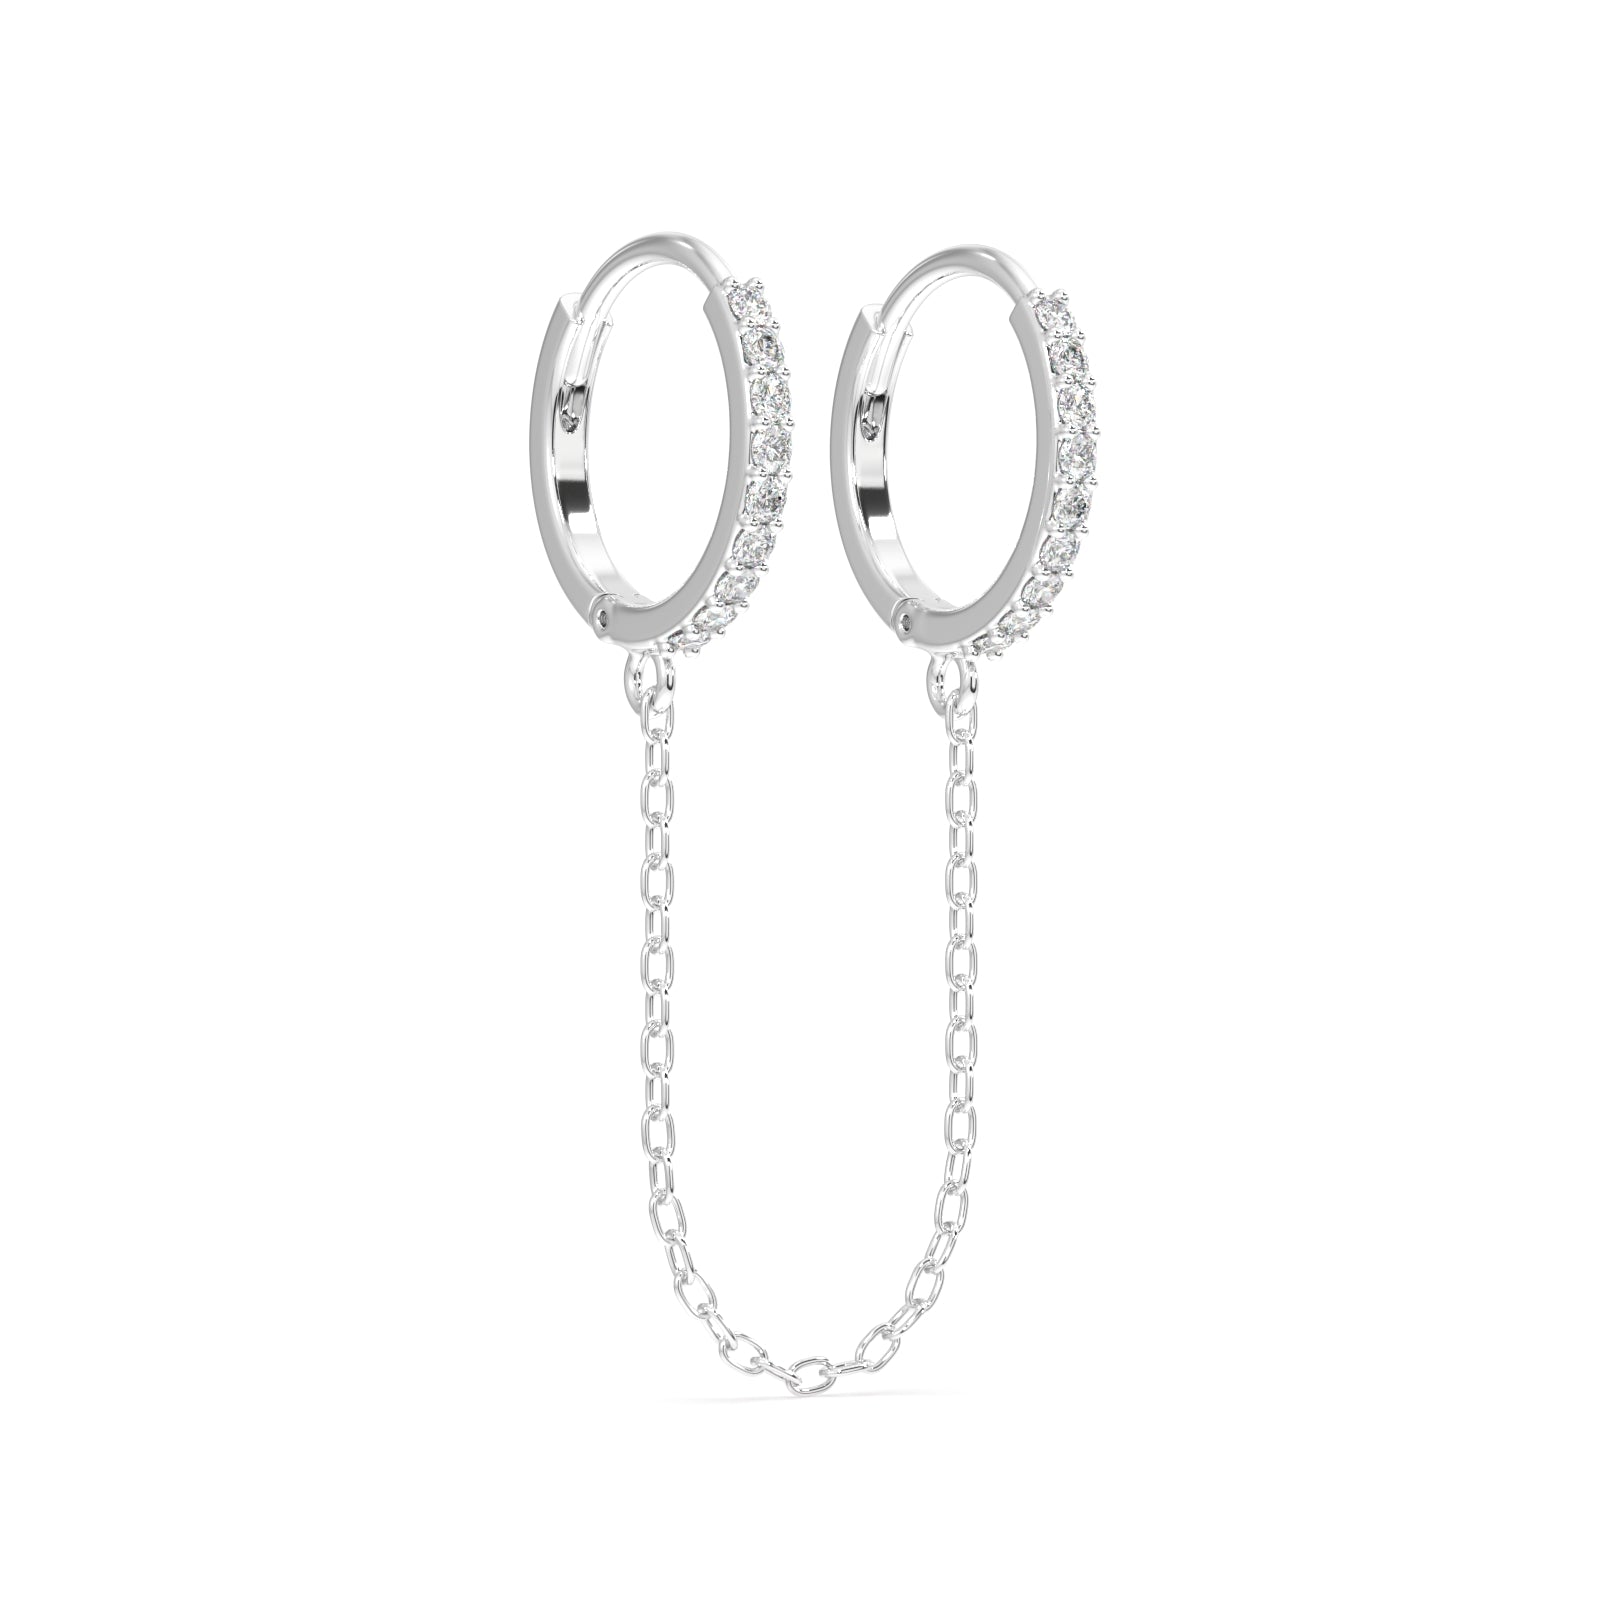 Connecting chain zircon hoops - pair